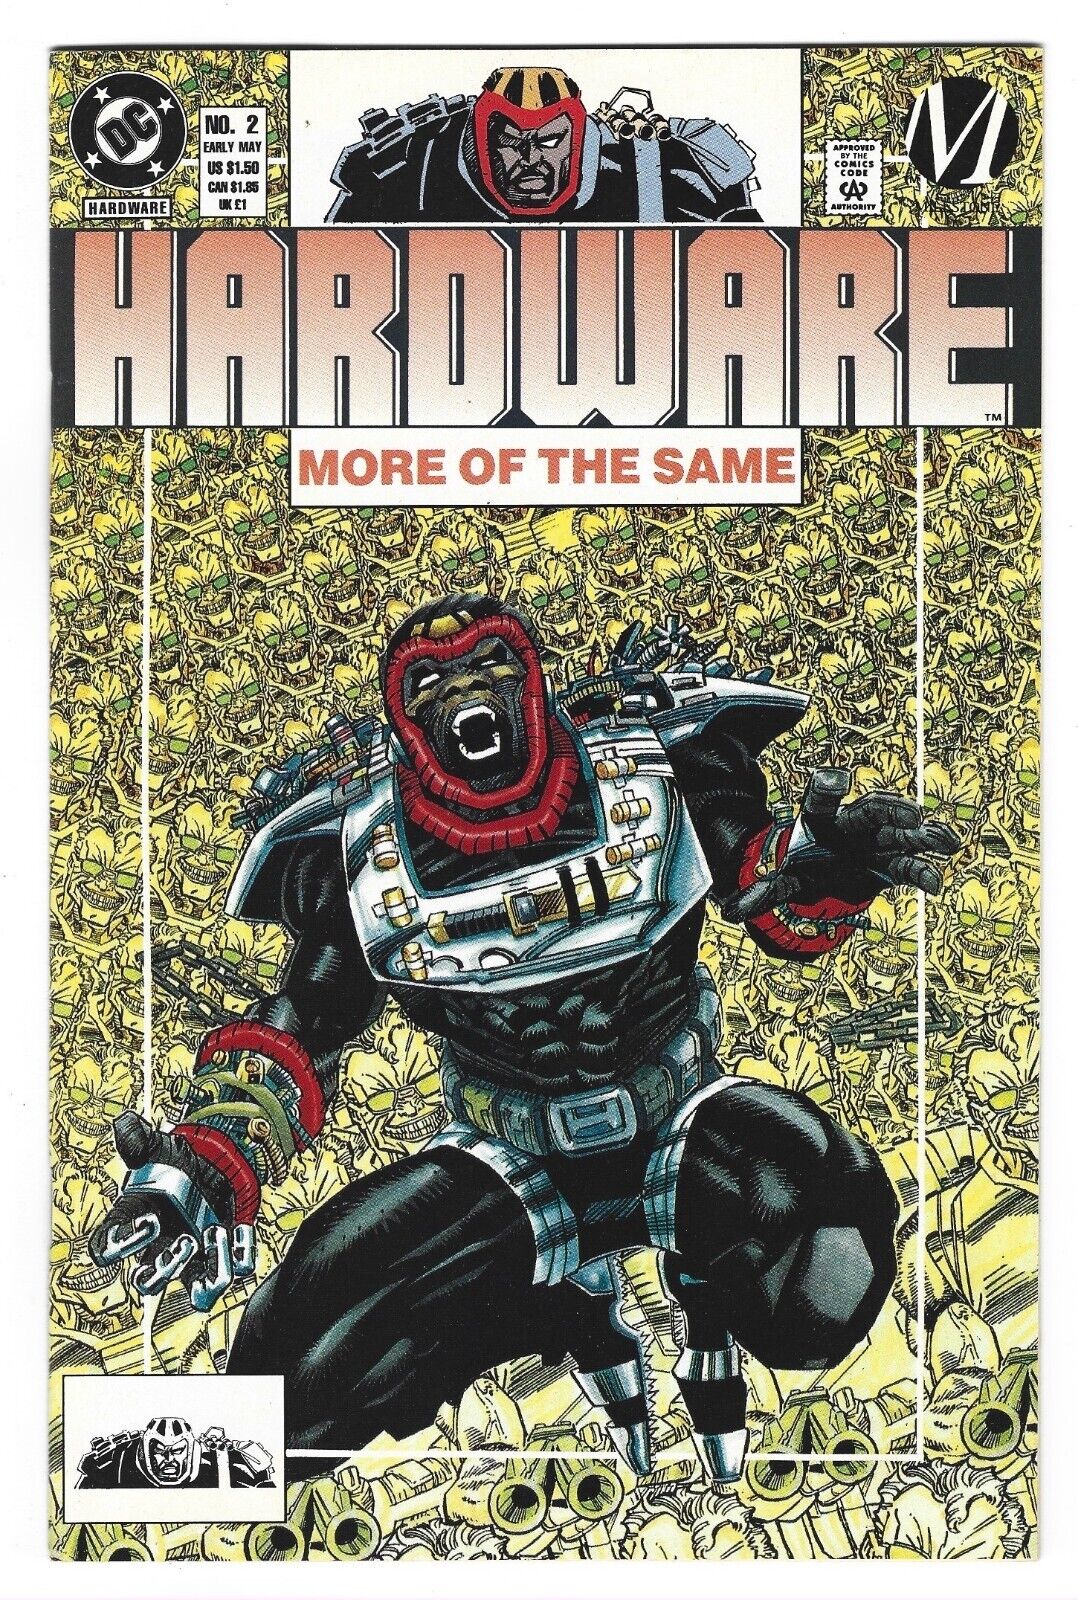 Hardware #4  1993